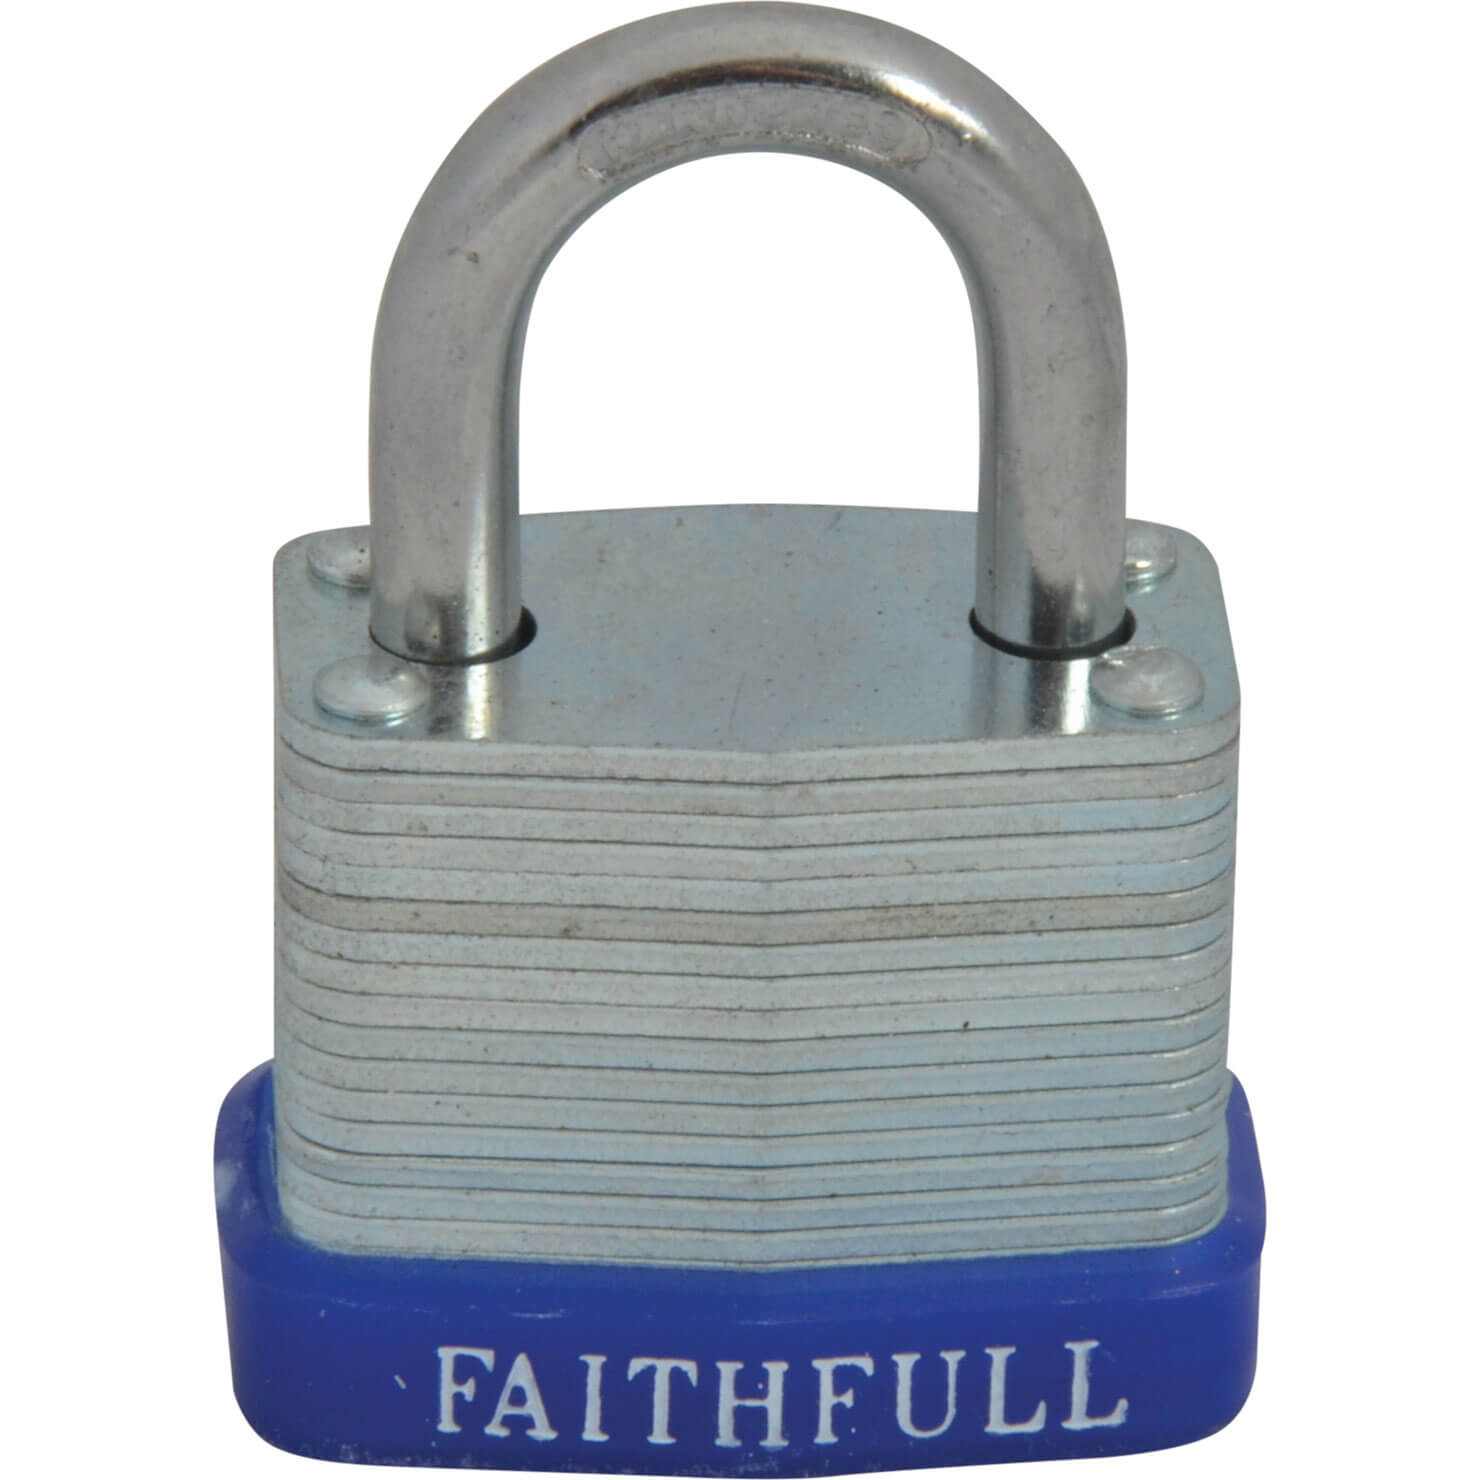 Photos - Door Lock Faithfull Laminated Steel Padlock 30mm Standard FAIPLLAM30 